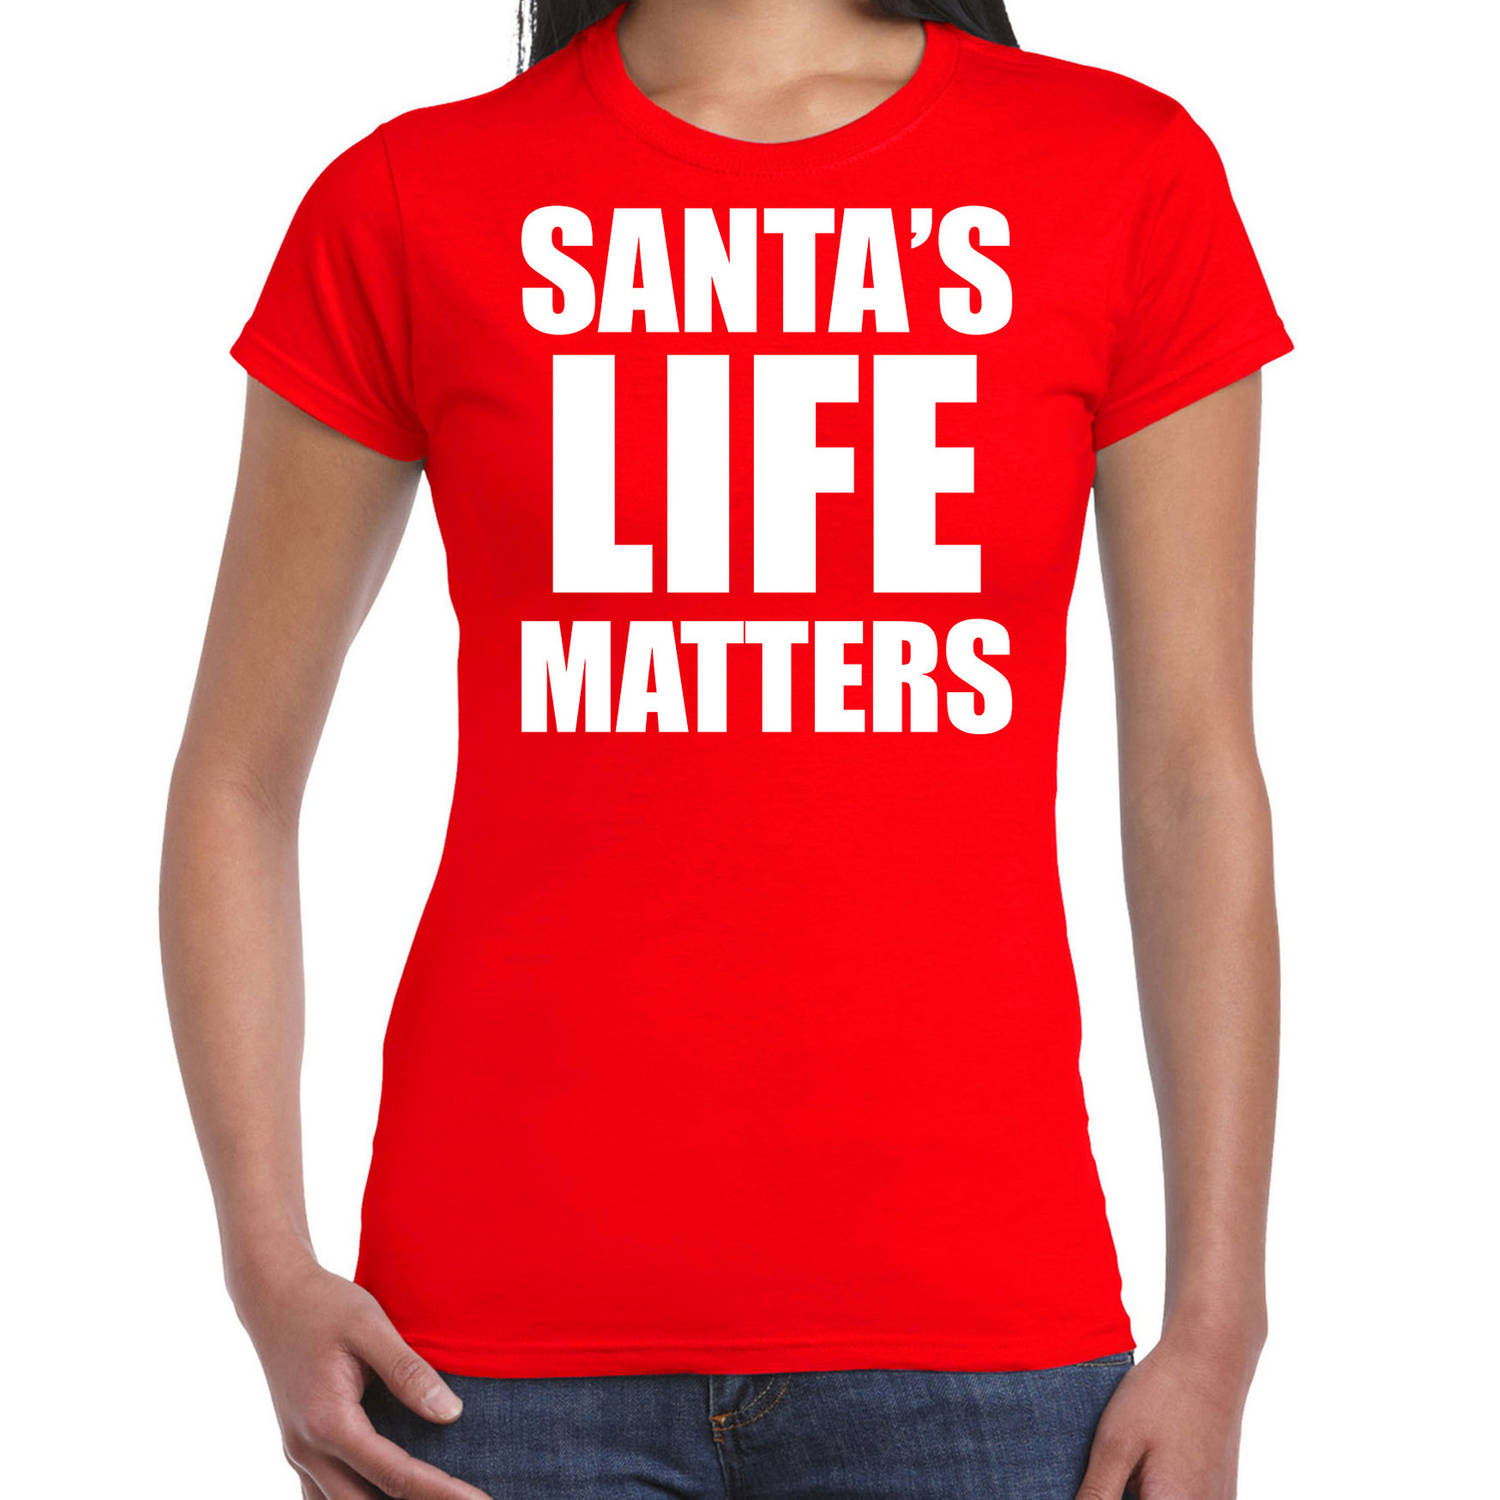 Rood Kerstshirt / Kerstkleding Santas life matters voor dames XL - kerst t-shirts